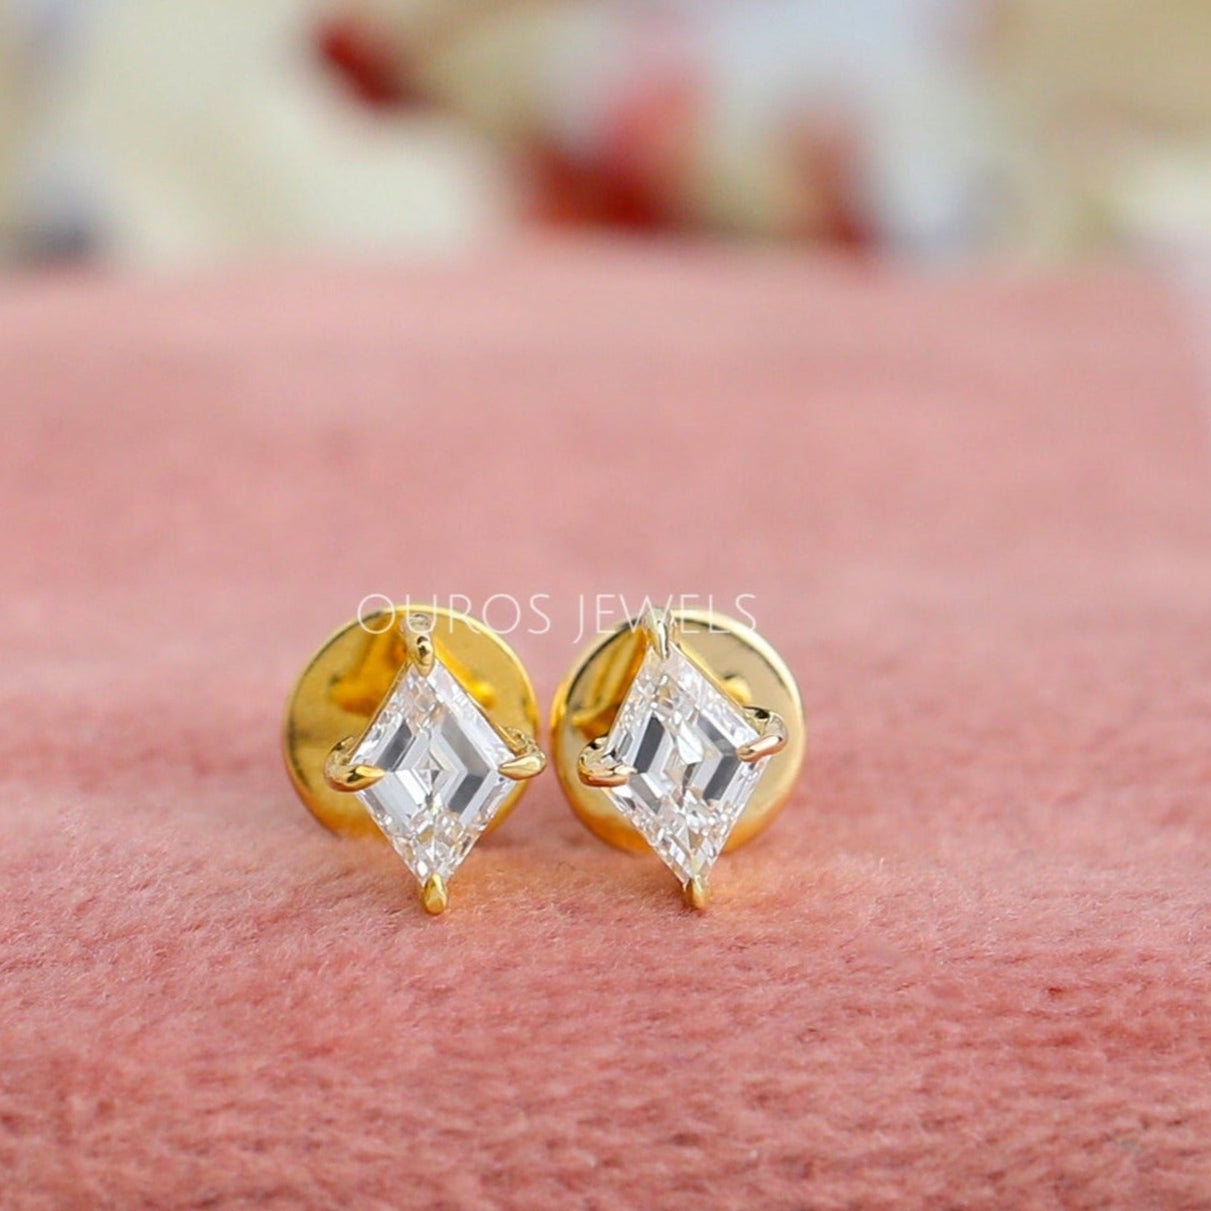 Kite Cut Diamond Stud Earrings | Ouros Jewels